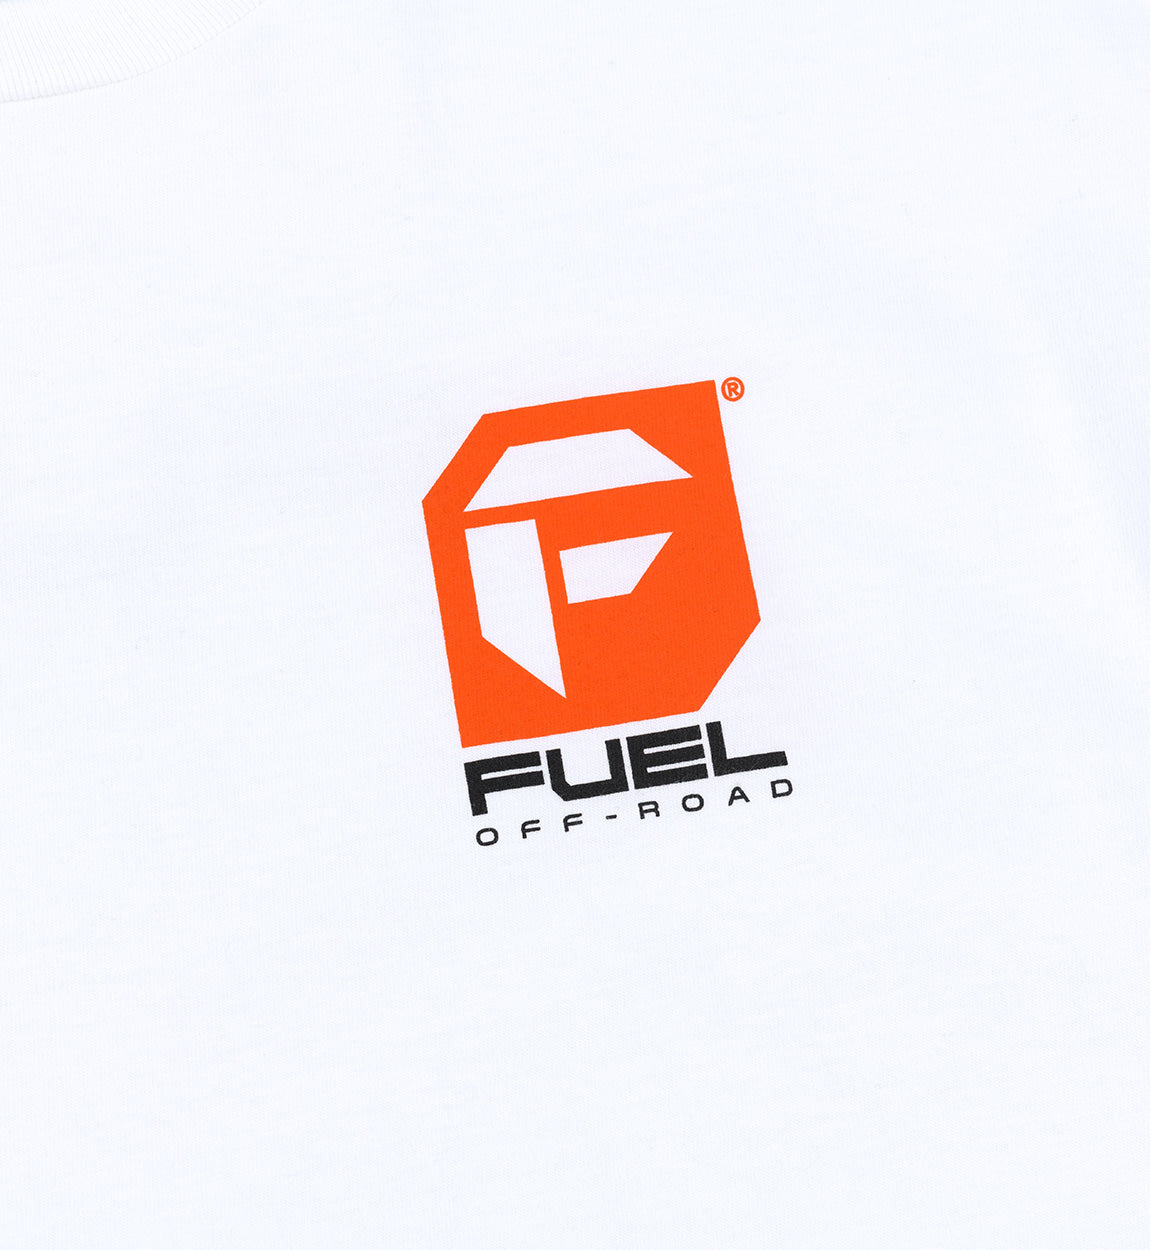 Fuel Orange Logo Short Sleeve Tee